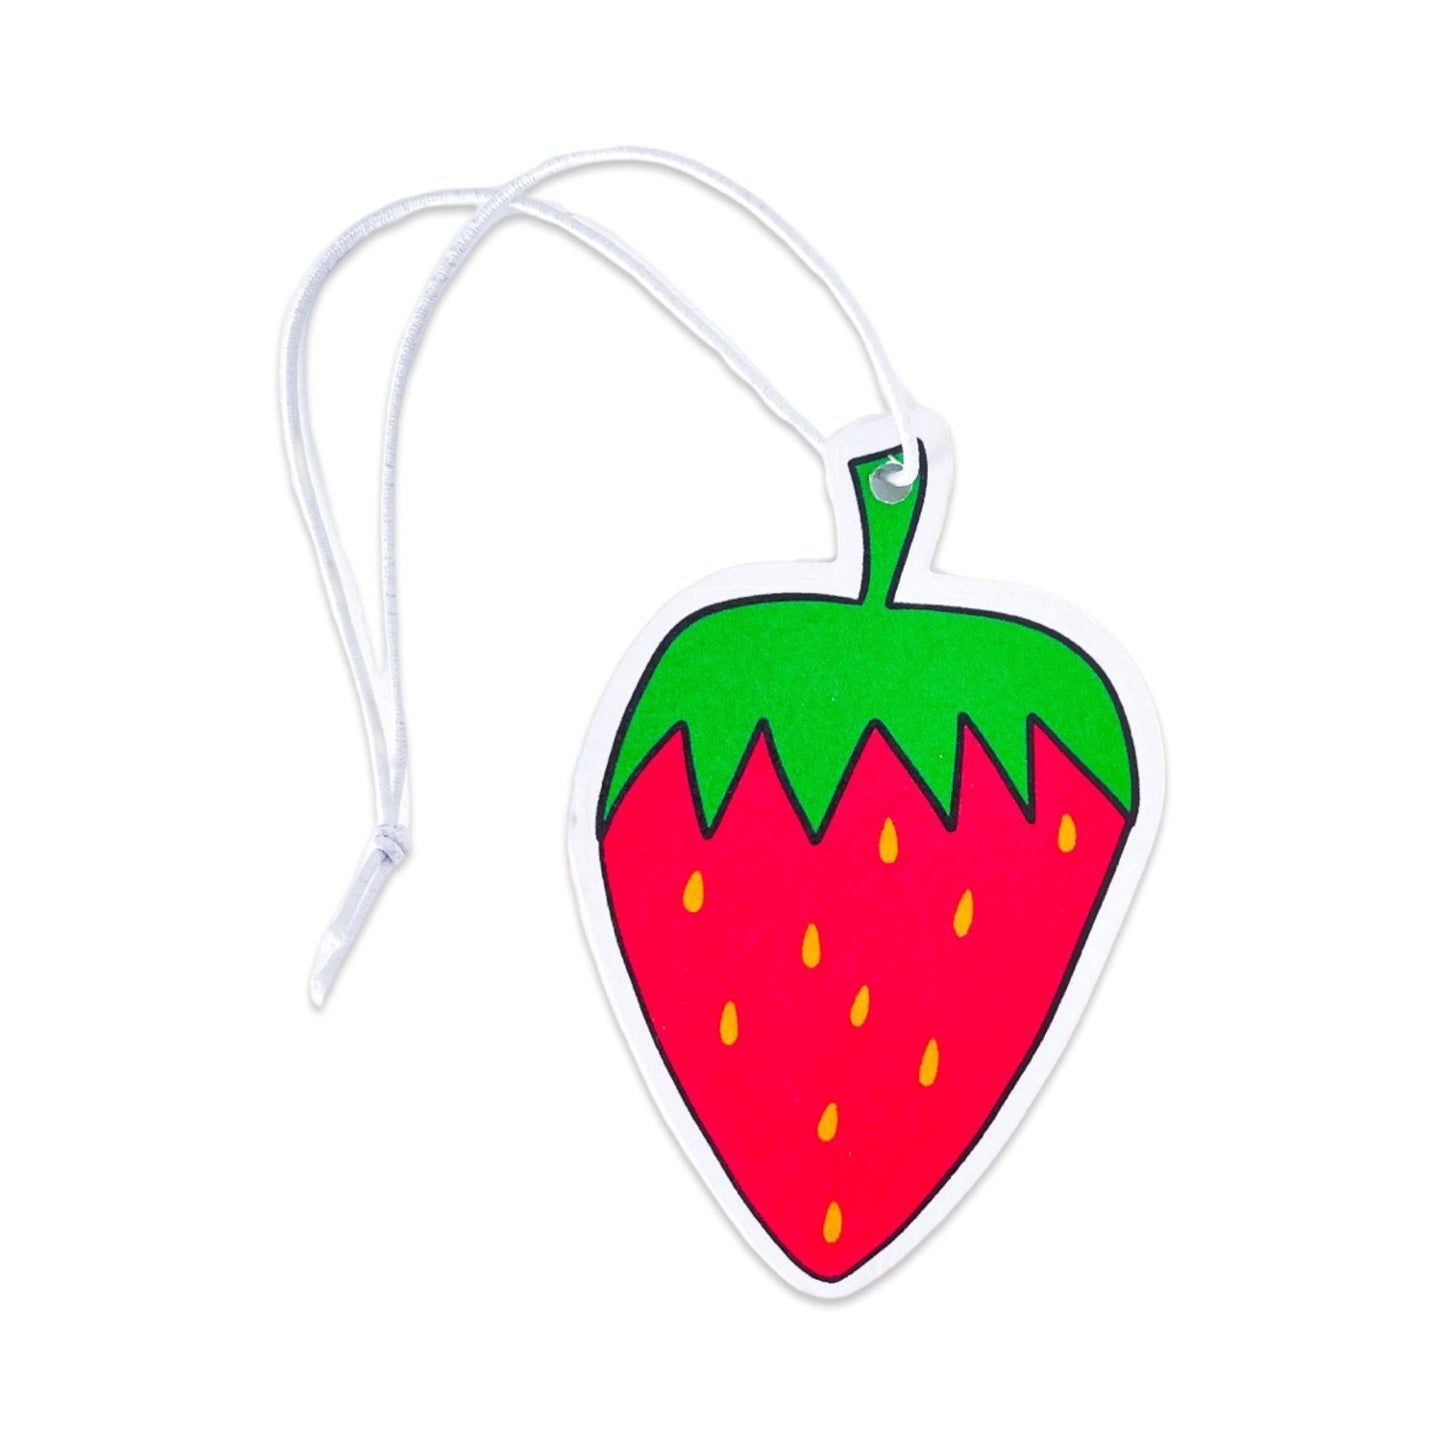 Strawberry Air Freshener